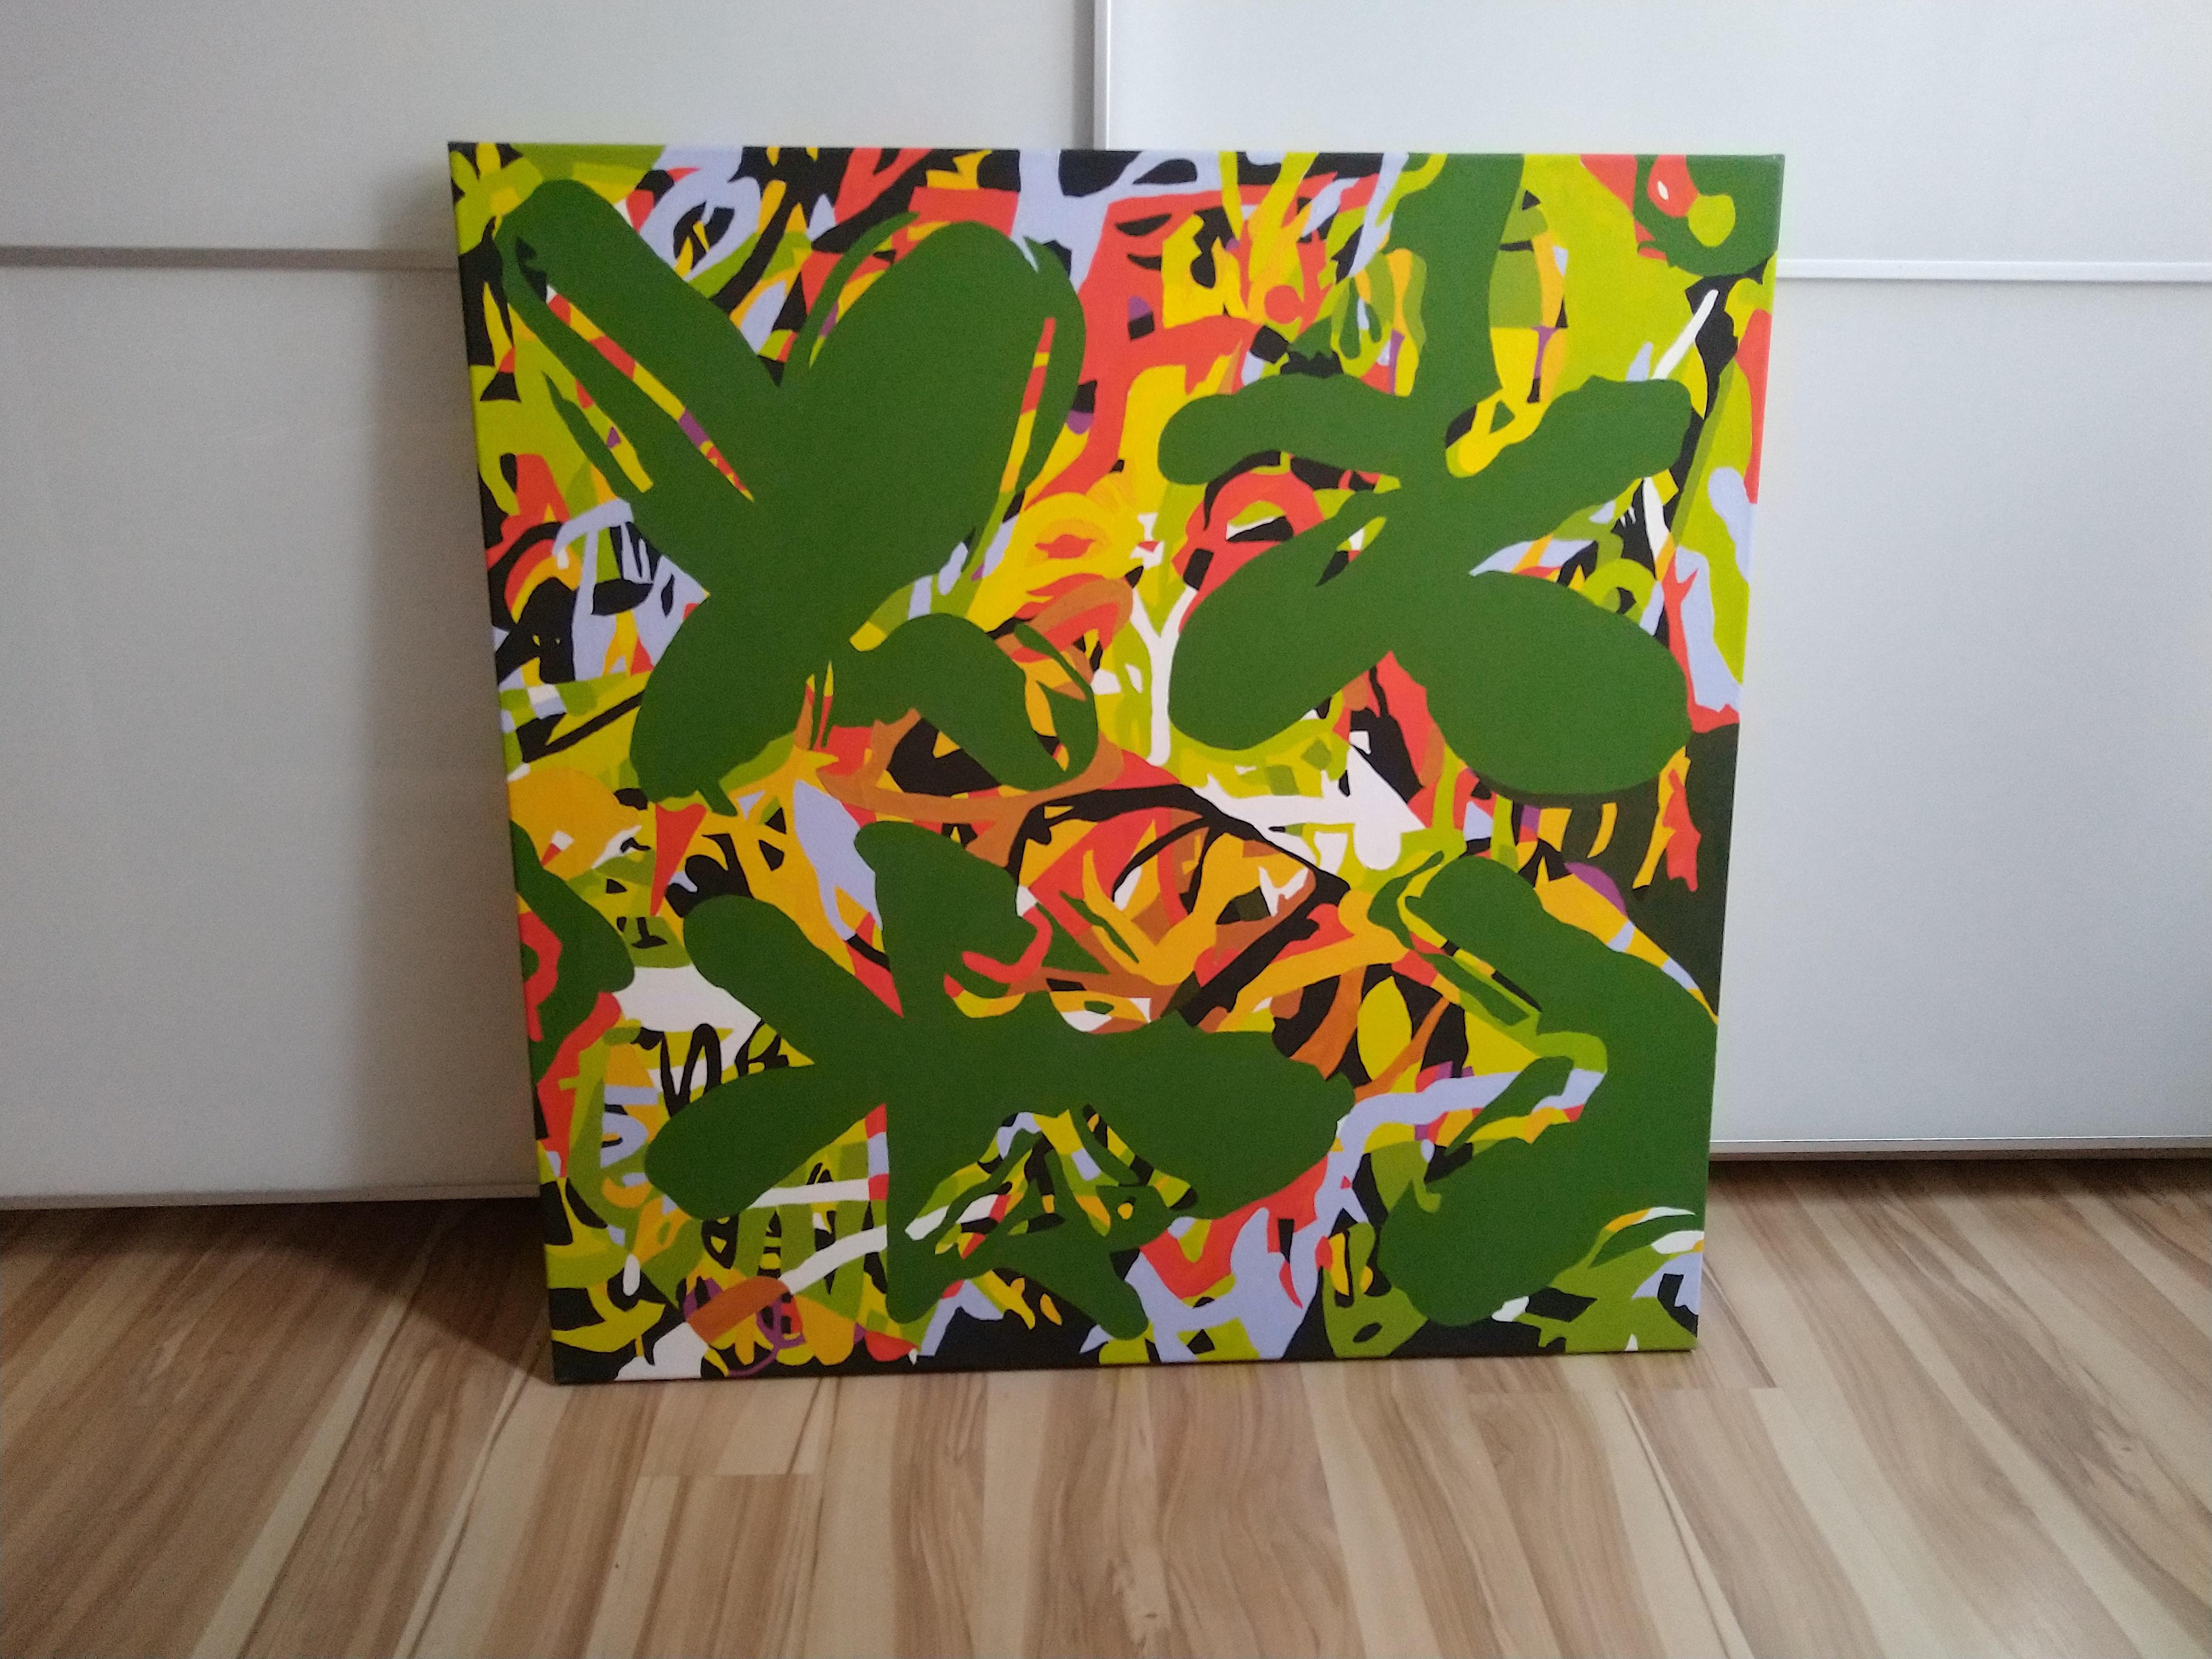 Tropical - Abstraction, Expression, Pop, Street Art, Energetic, Joyful - Green Figurative Painting by Paweł Myszka